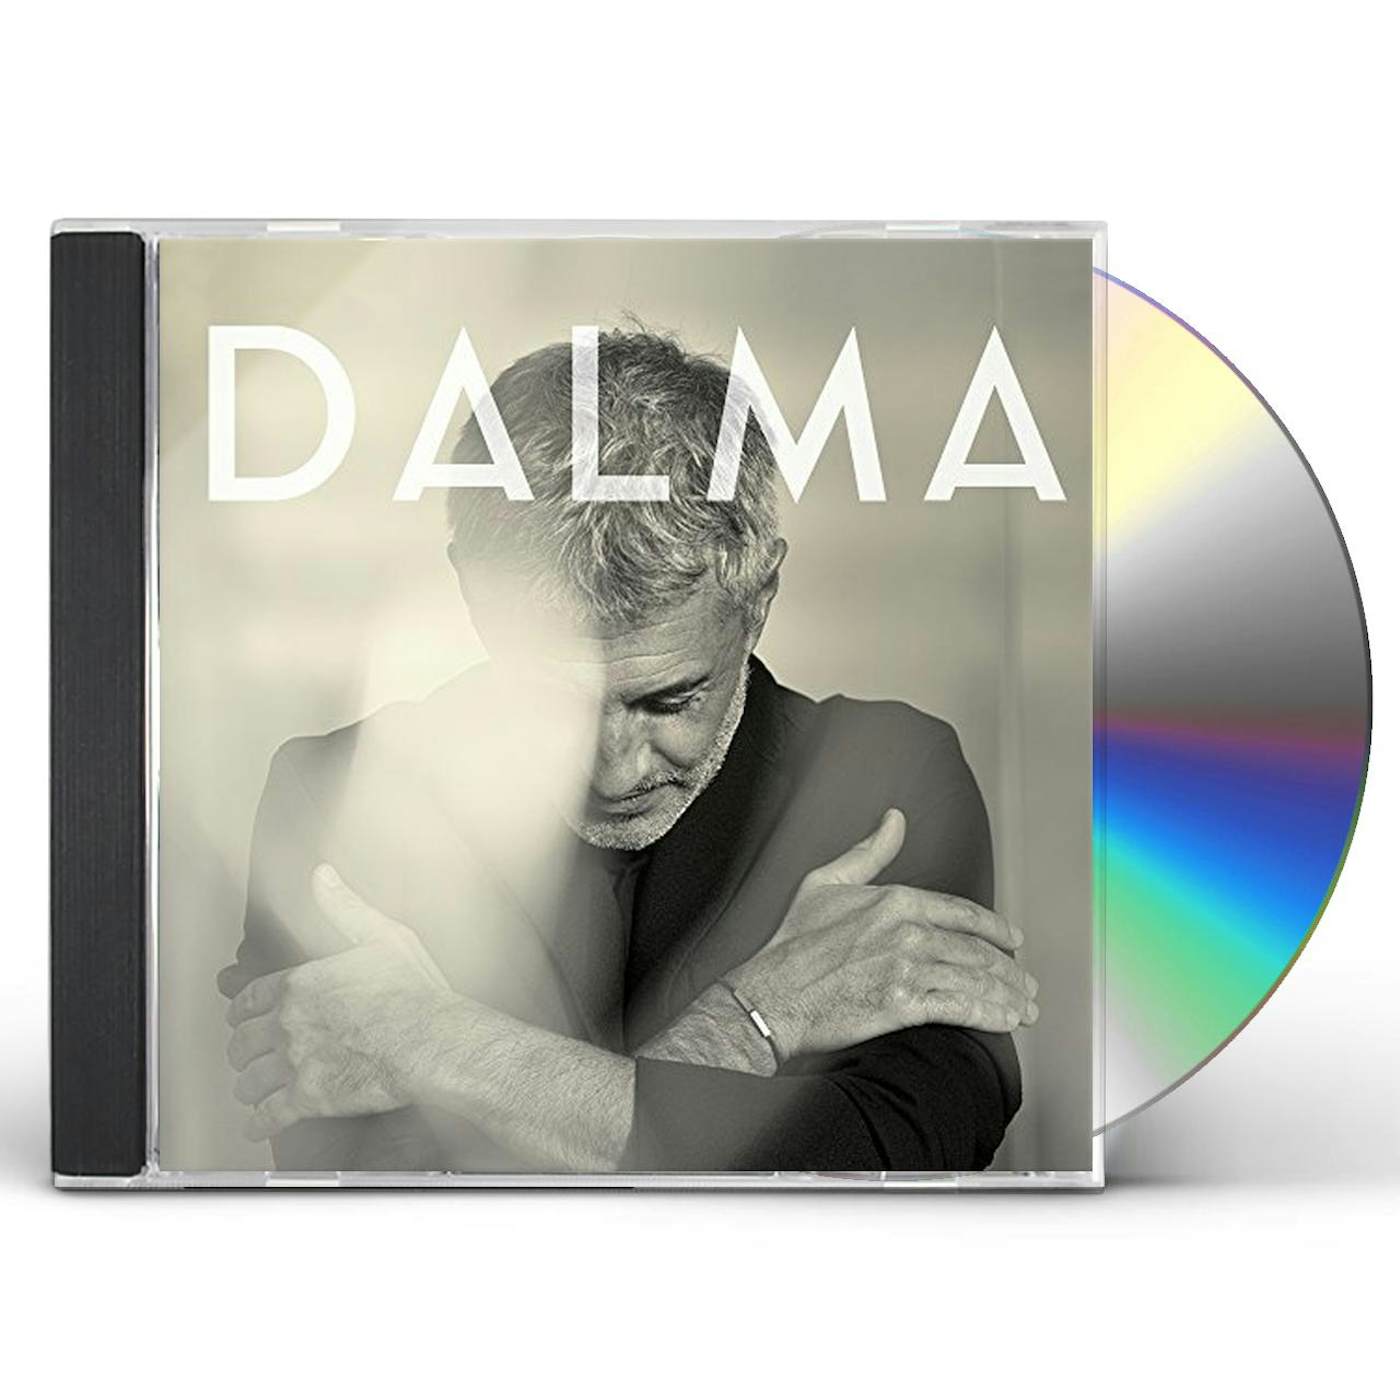 Sergio Dalma DALMA CD